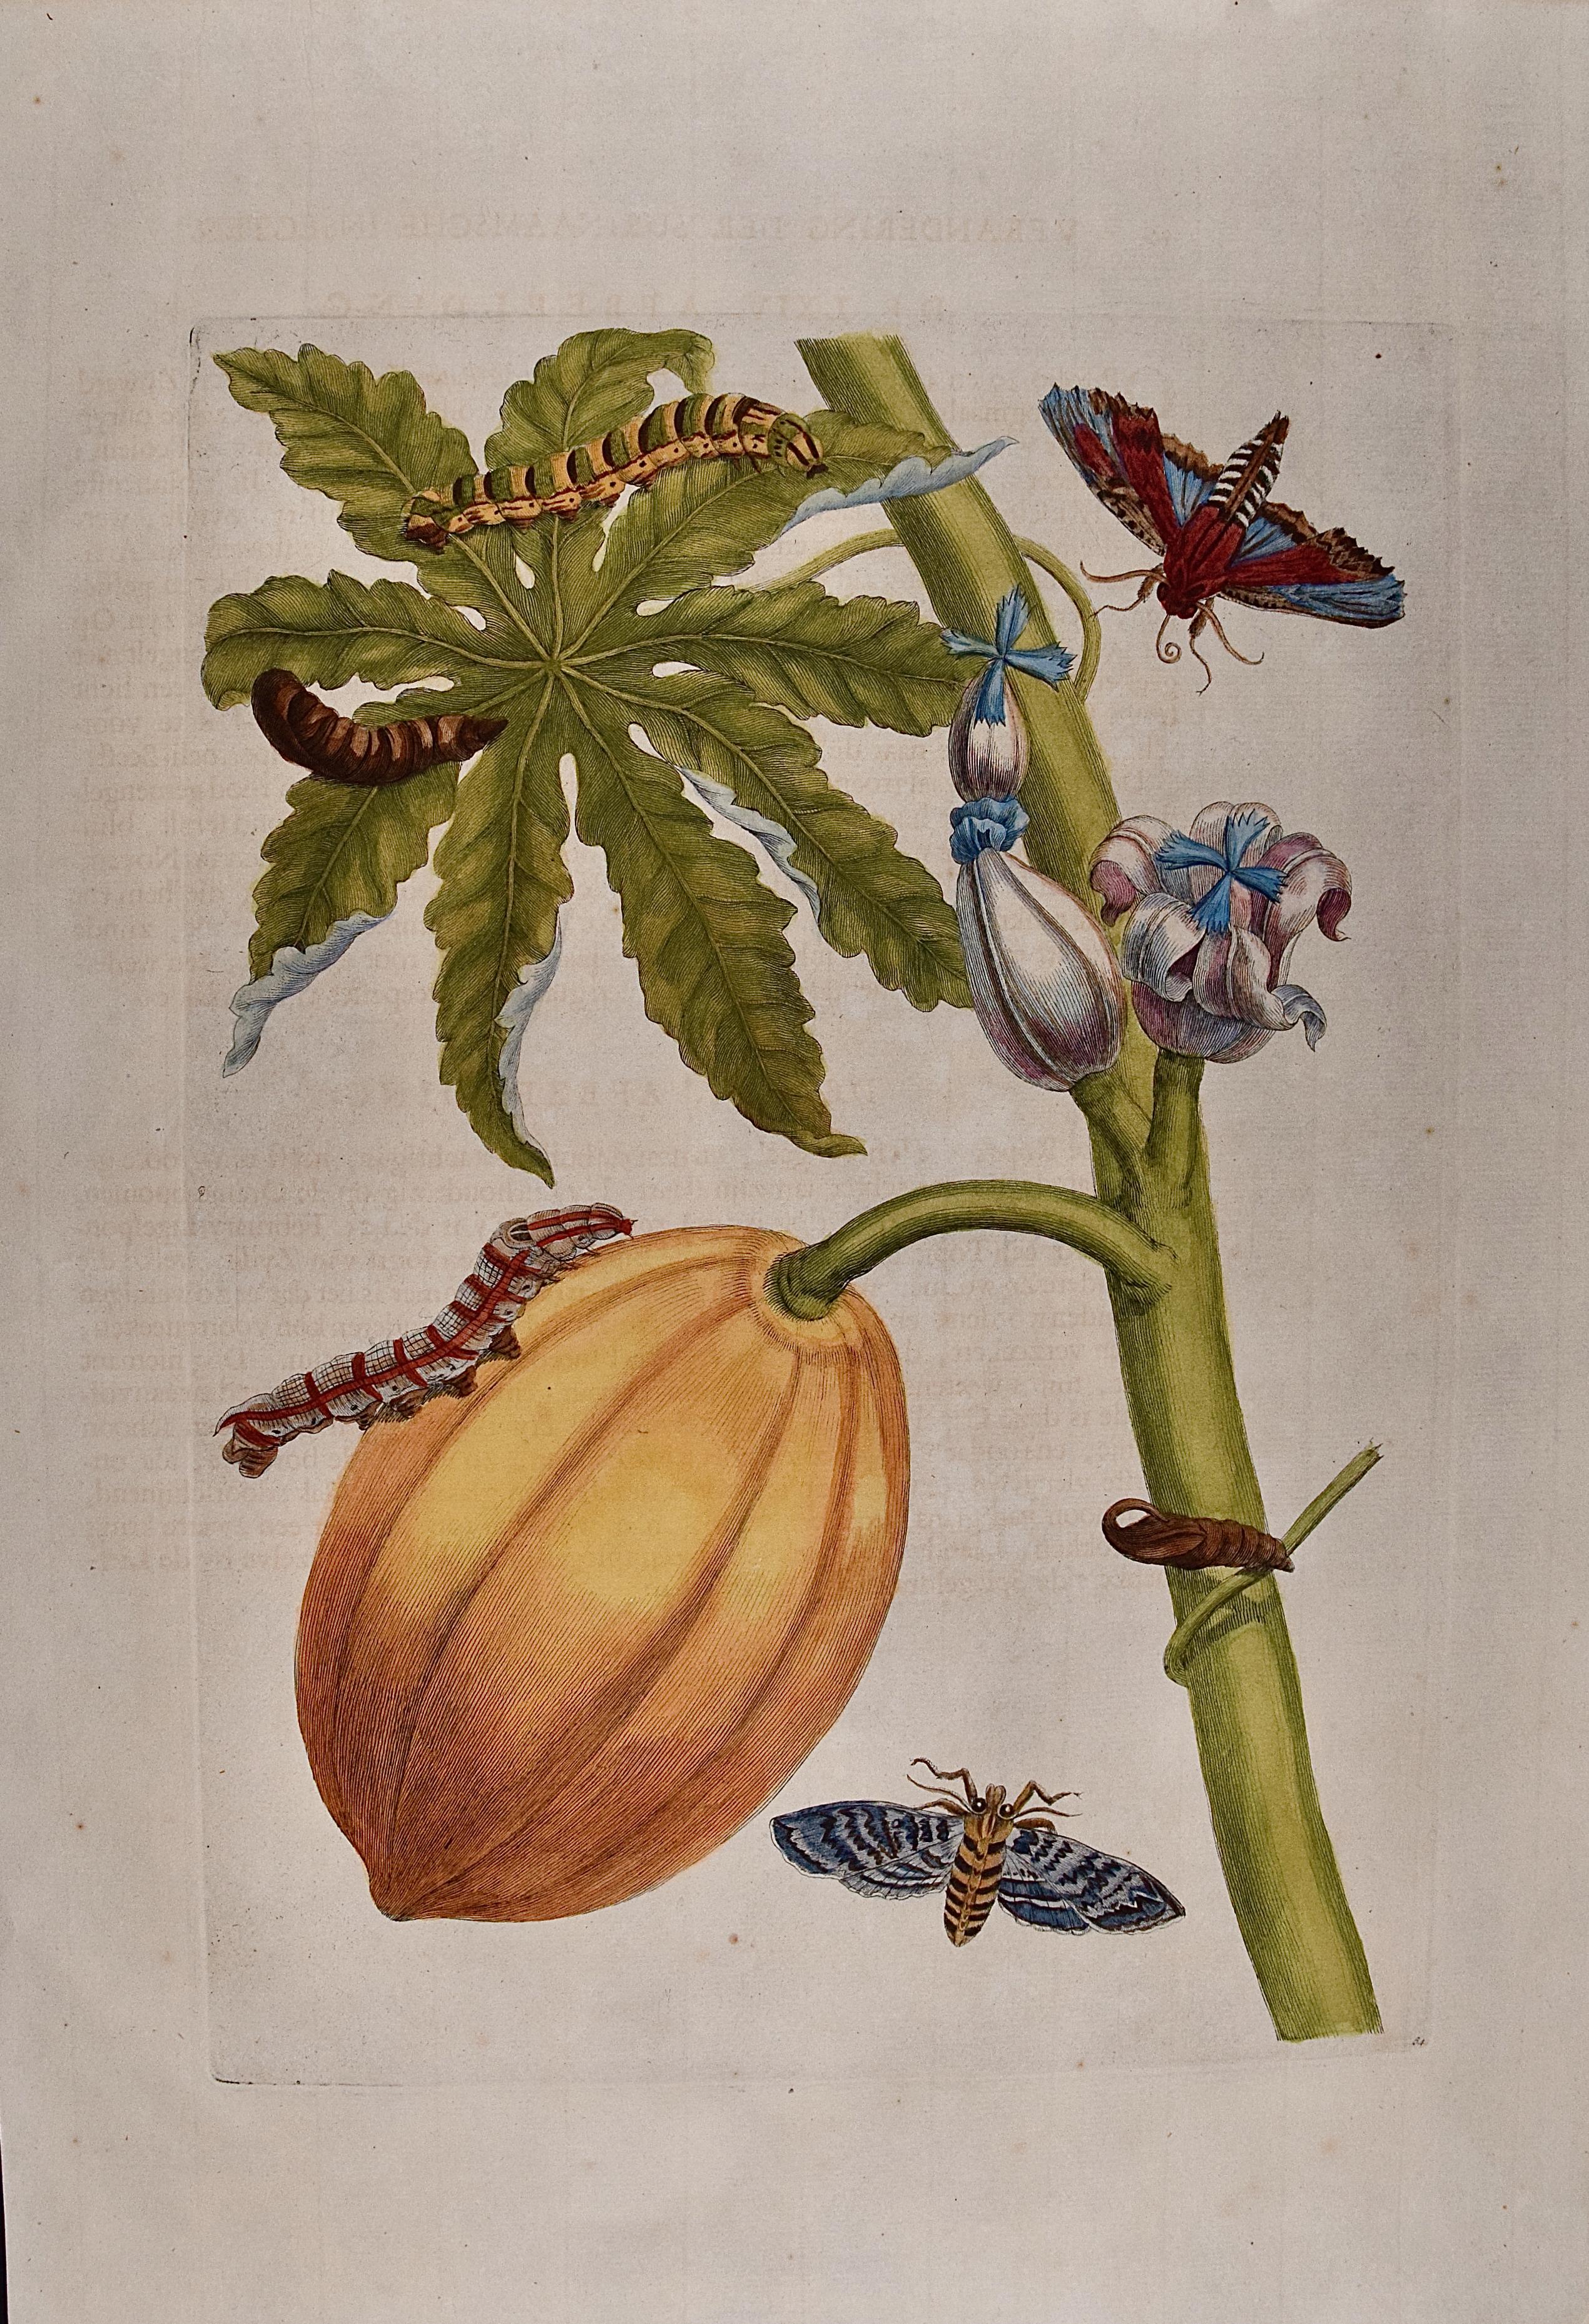 Maria Sybilla Merian Still-Life Print - Papaya and Moth Metamorphosis: 18th C. Hand-colored Engraving by Maria Merian  